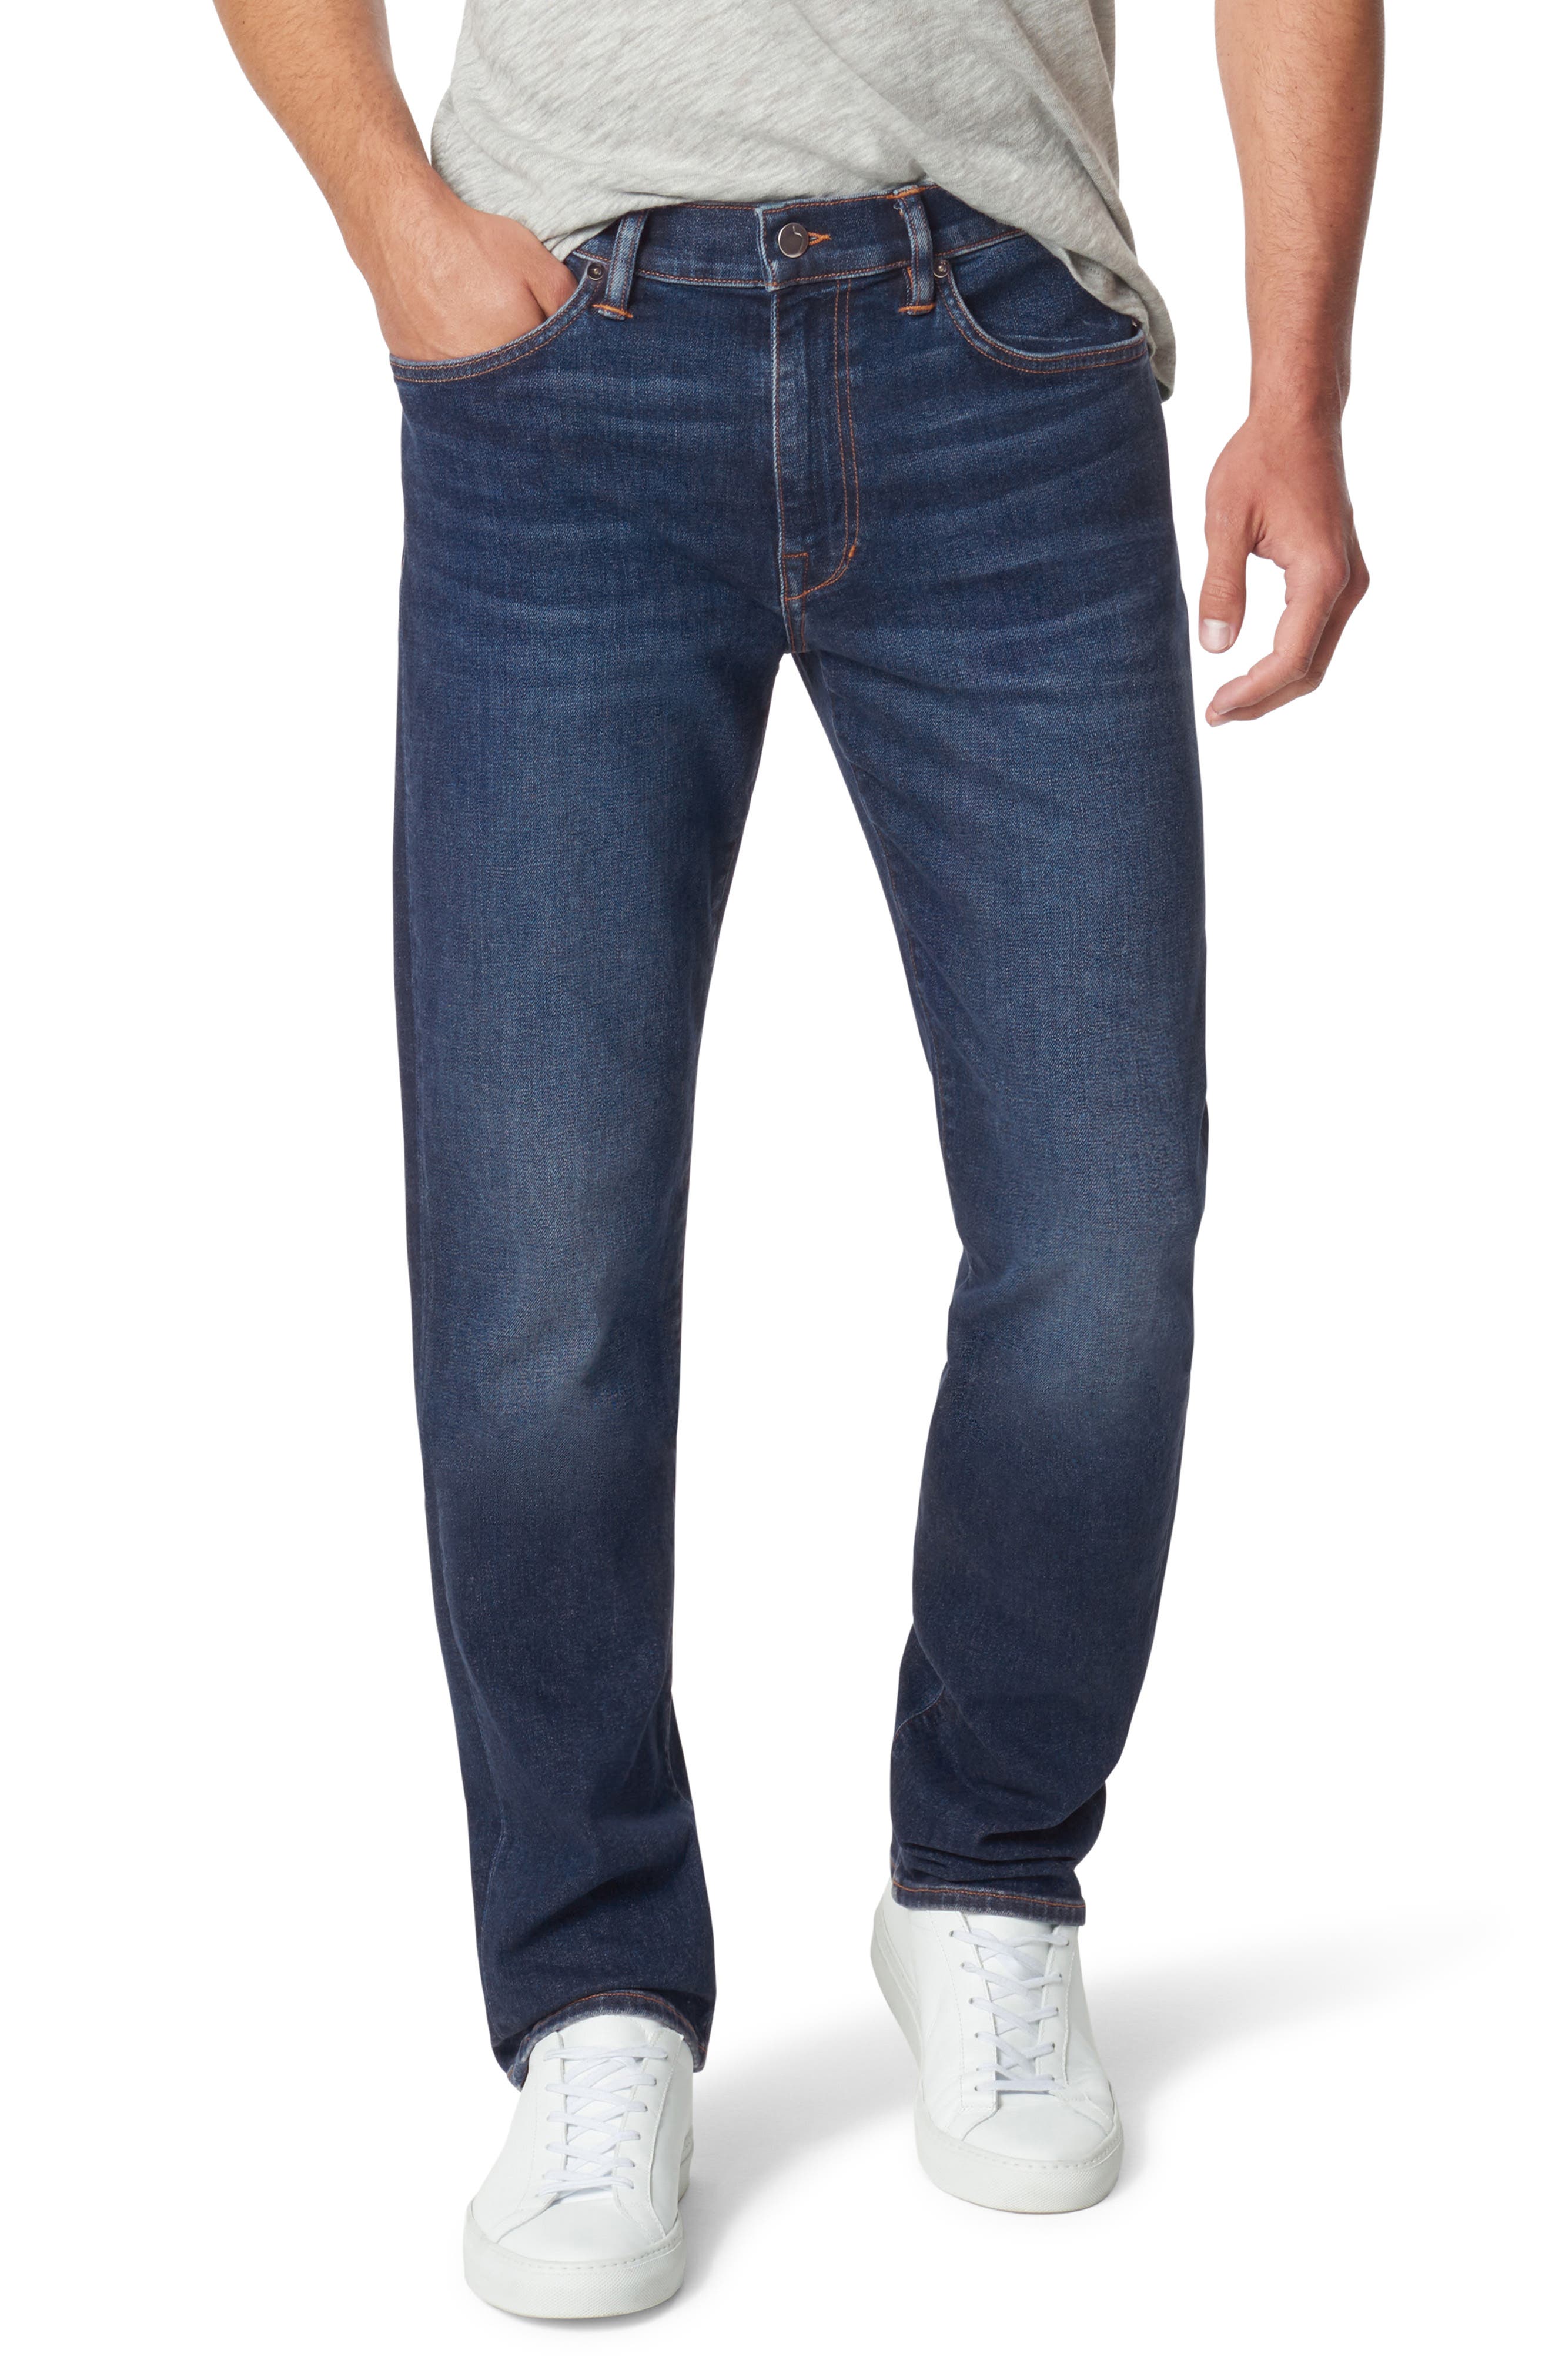 nordstrom joe's jeans men's